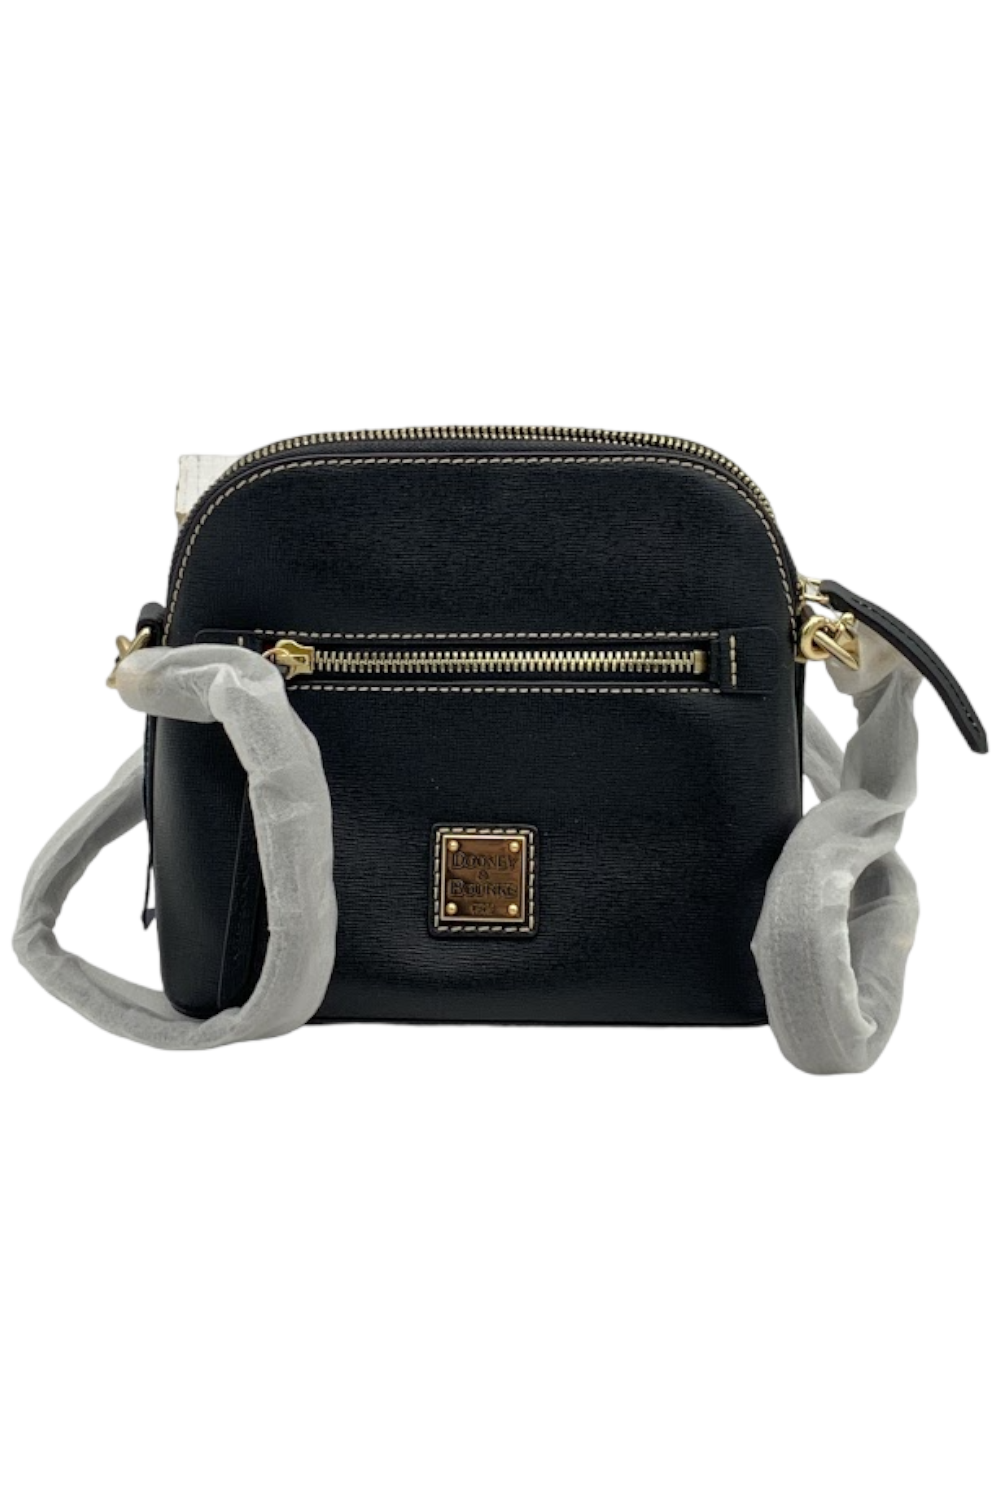 Dooney Bourke Saffiano Leather Camera Crossbody Bag 